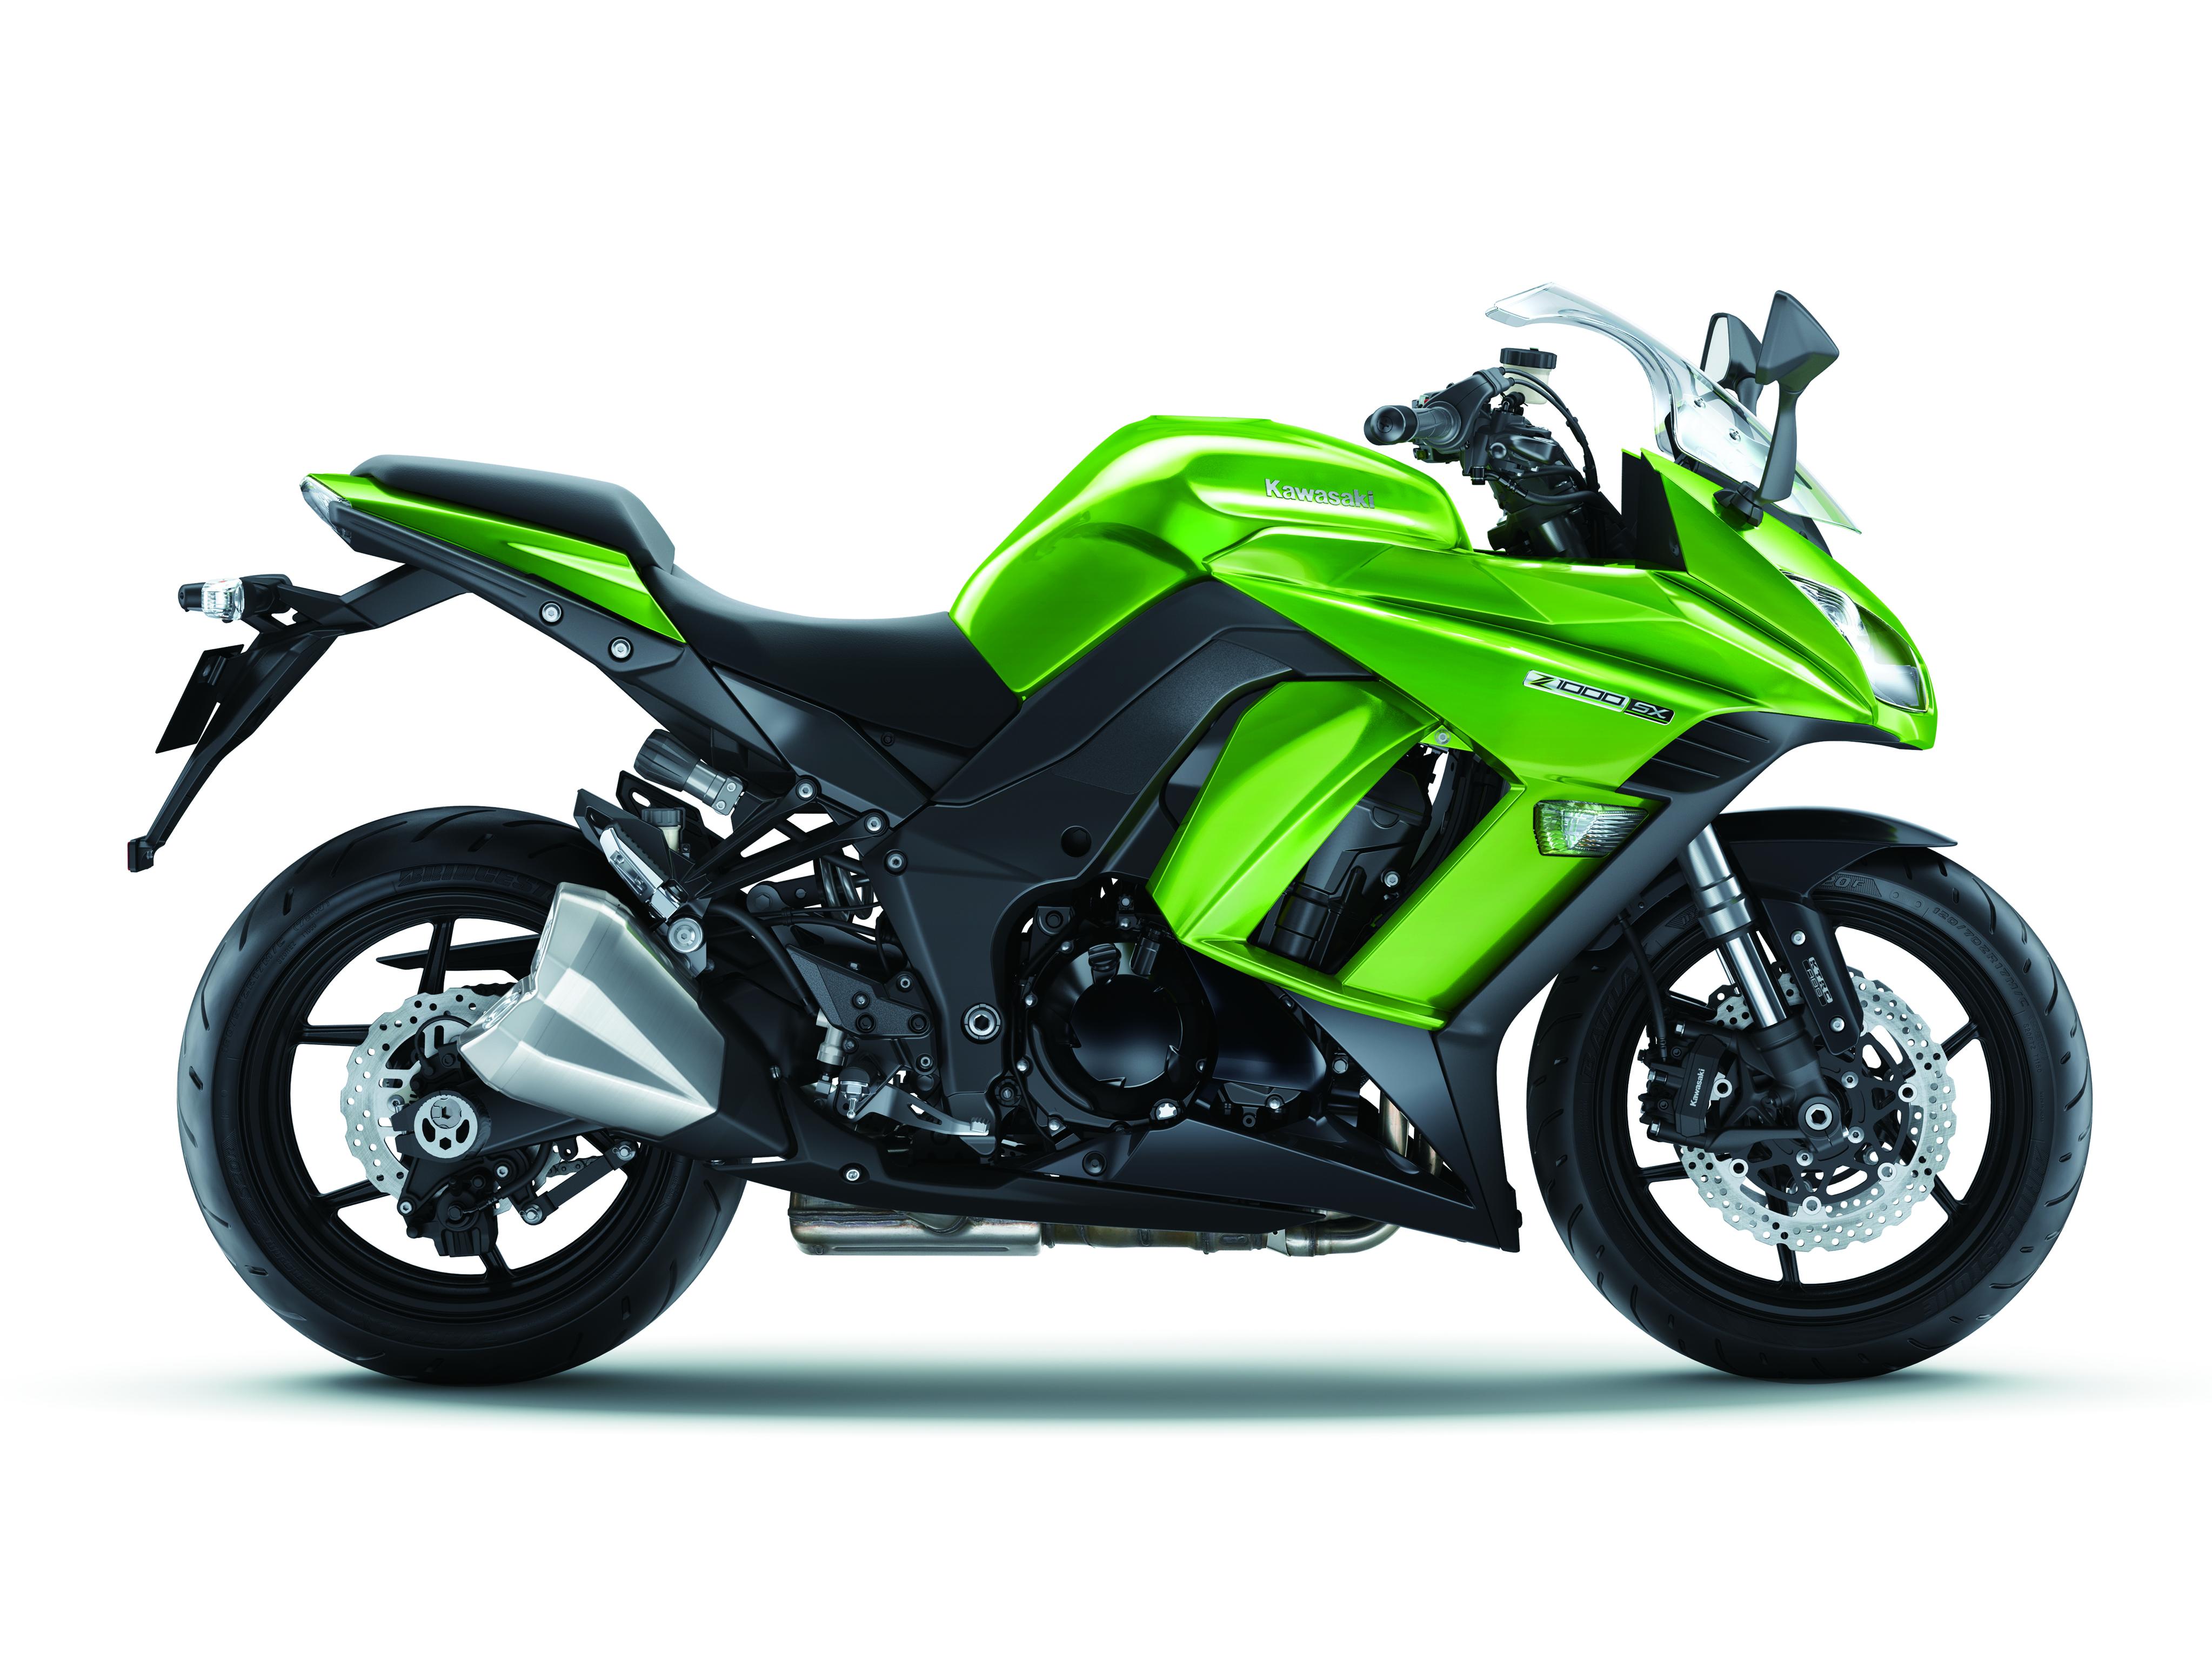 First Ride: 2014 Kawasaki Z1000SX review